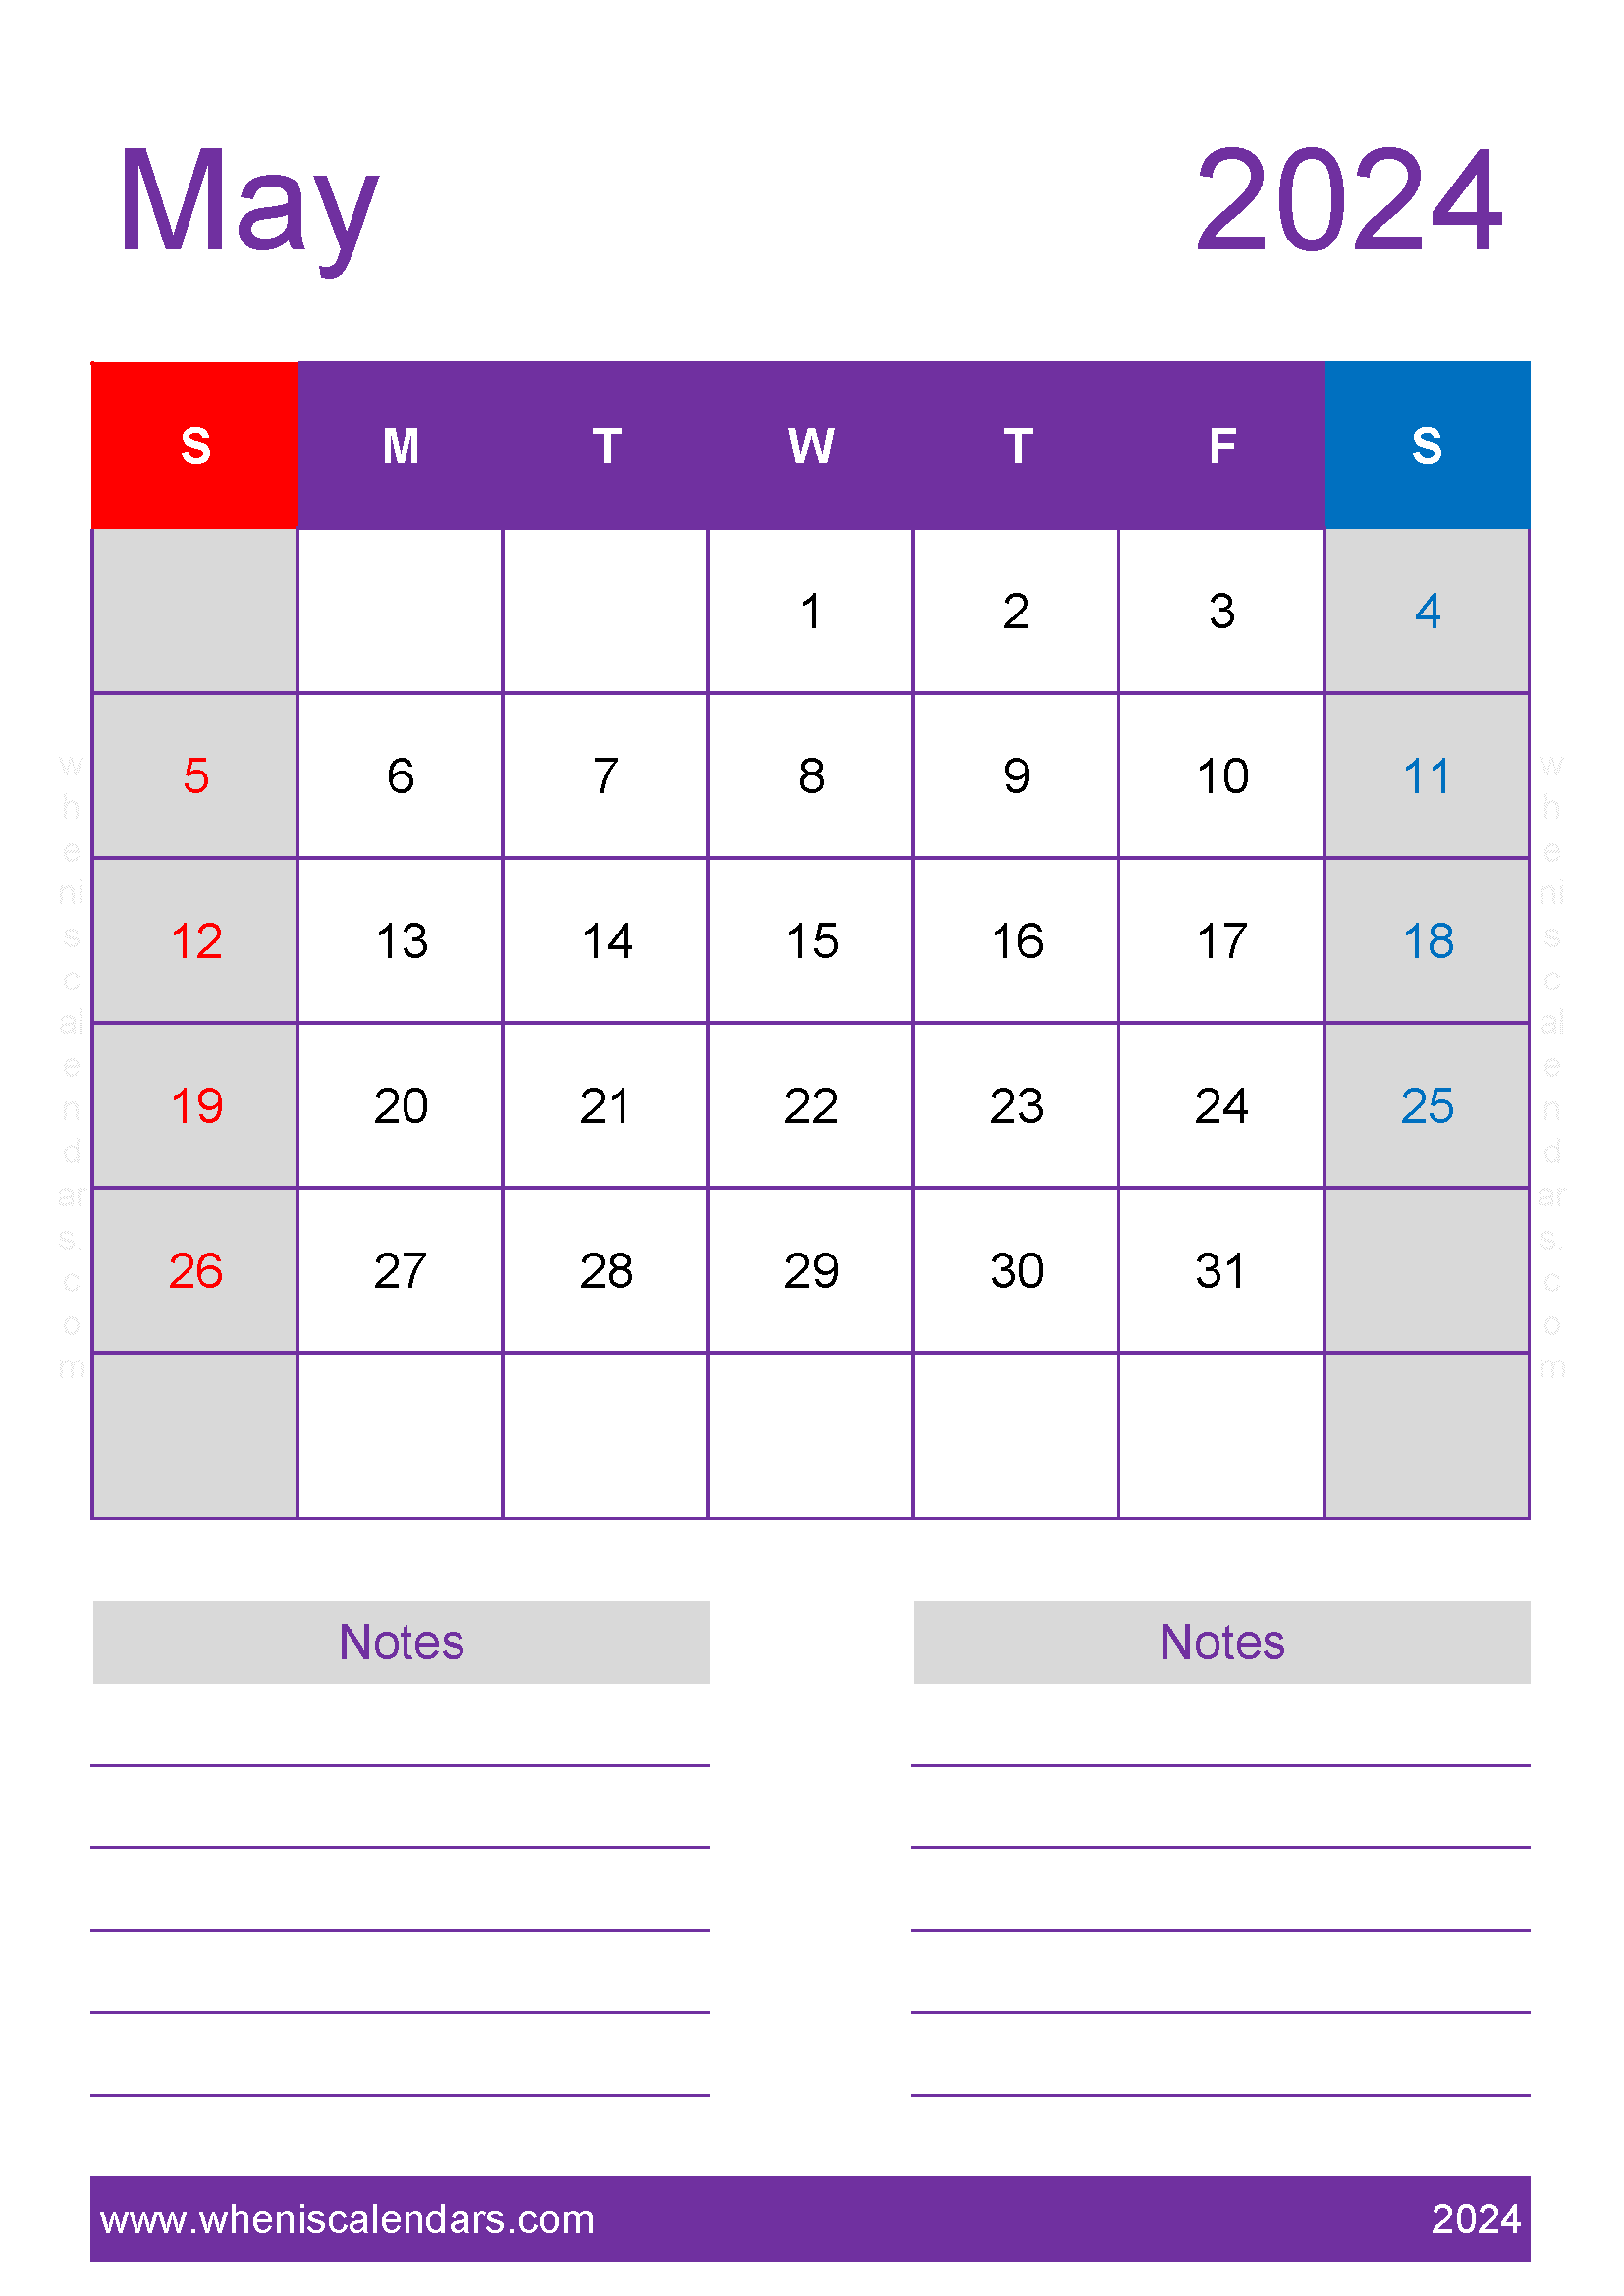 May 2024 Calendar large print Monthly Calendar